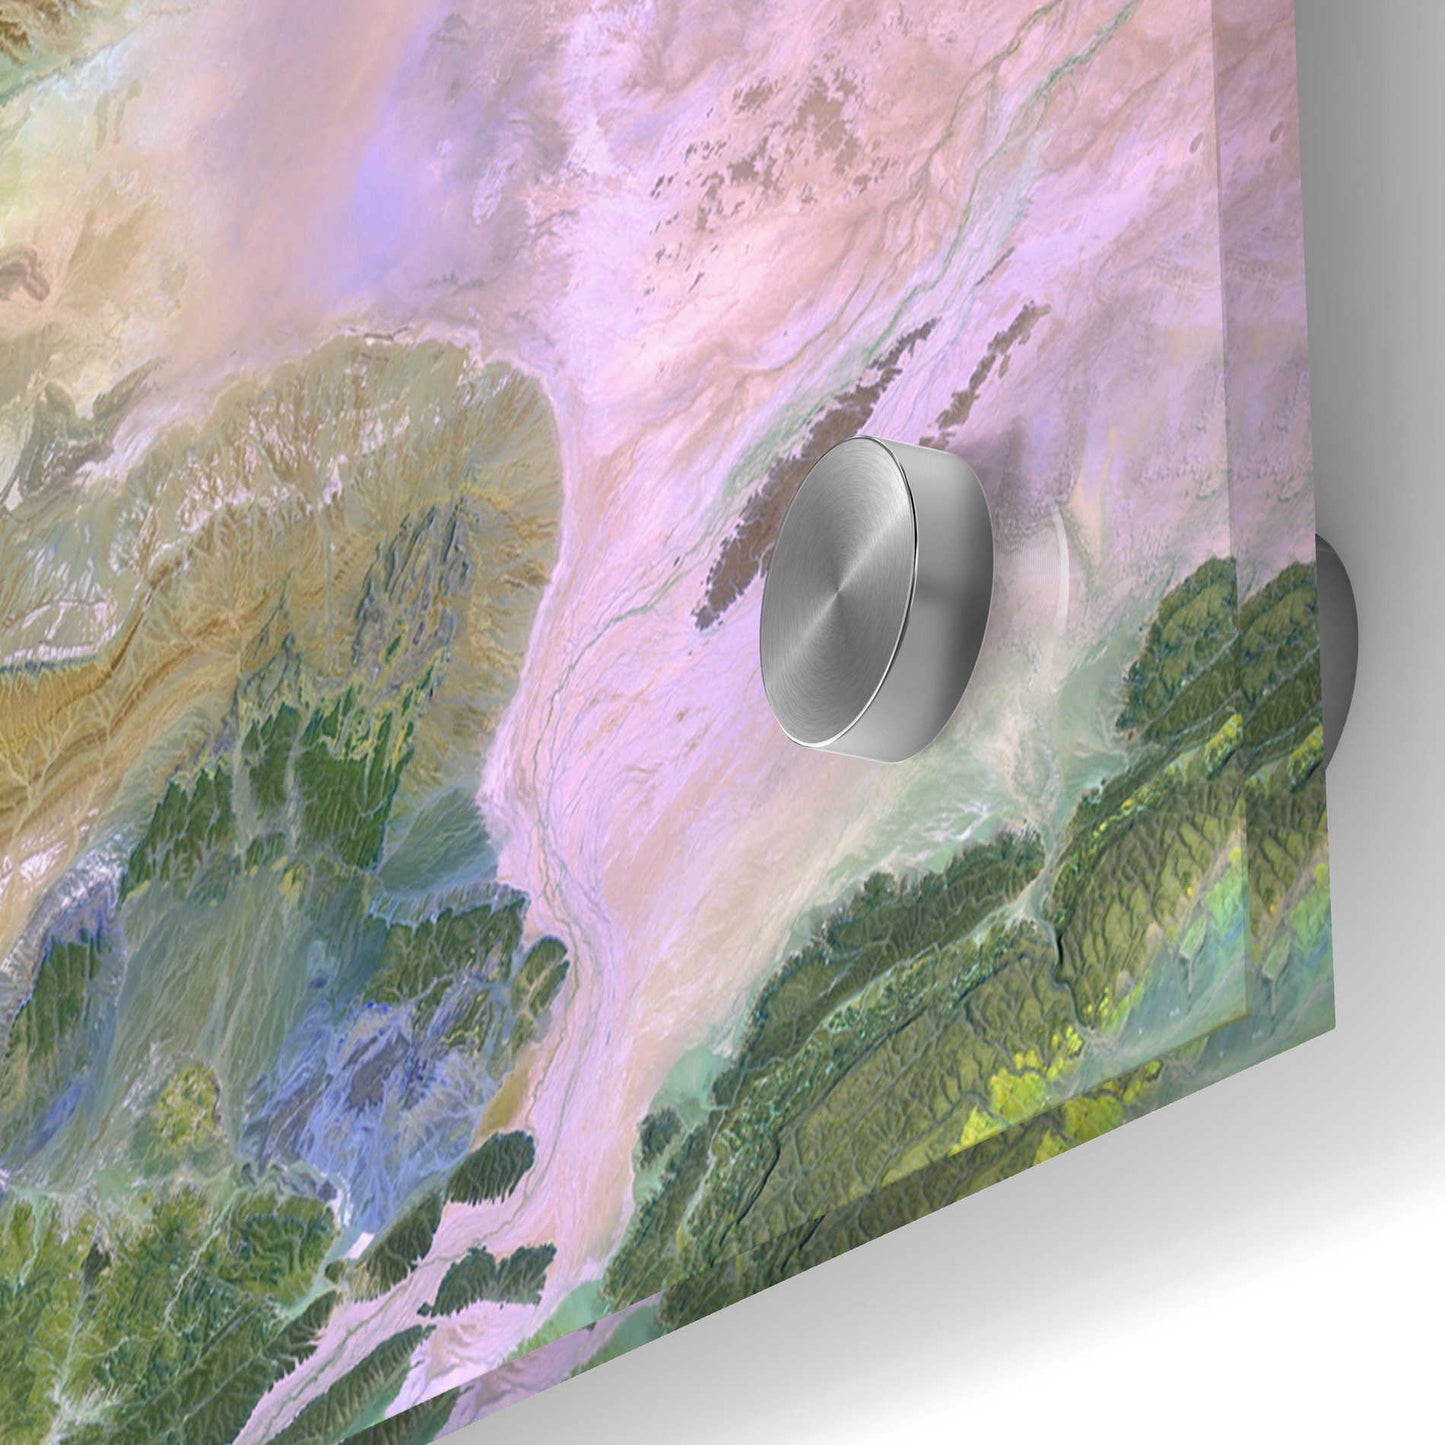 Epic Art 'Earth as Art: Atlas Mountains' Acrylic Glass Wall Art,36x36